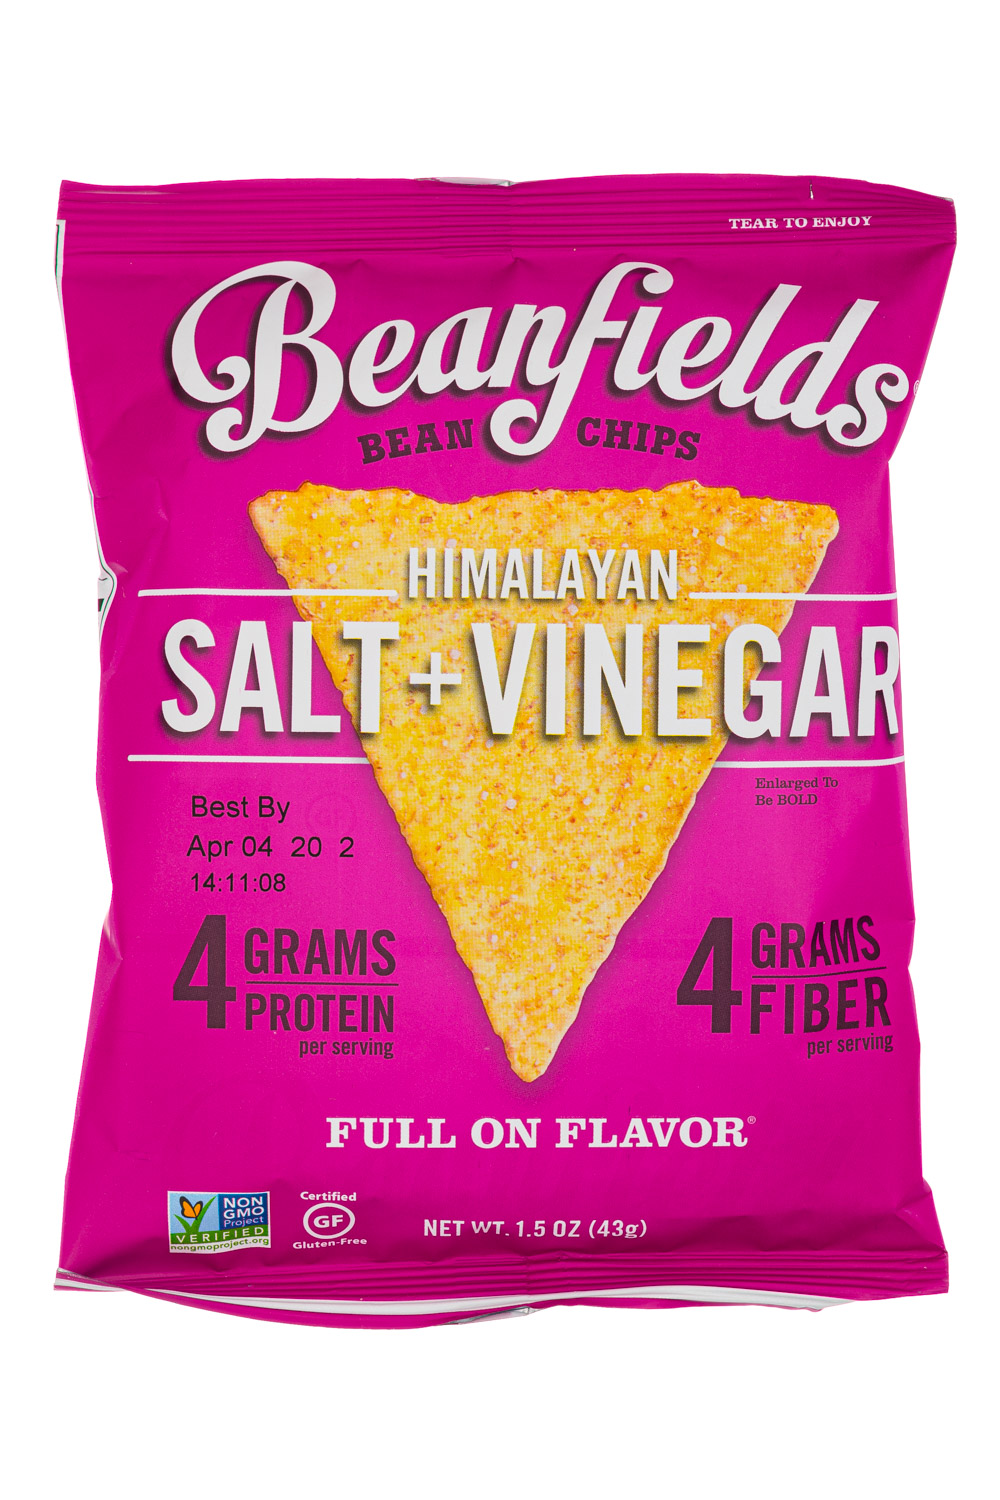 Himalayan Salt + Vinegar